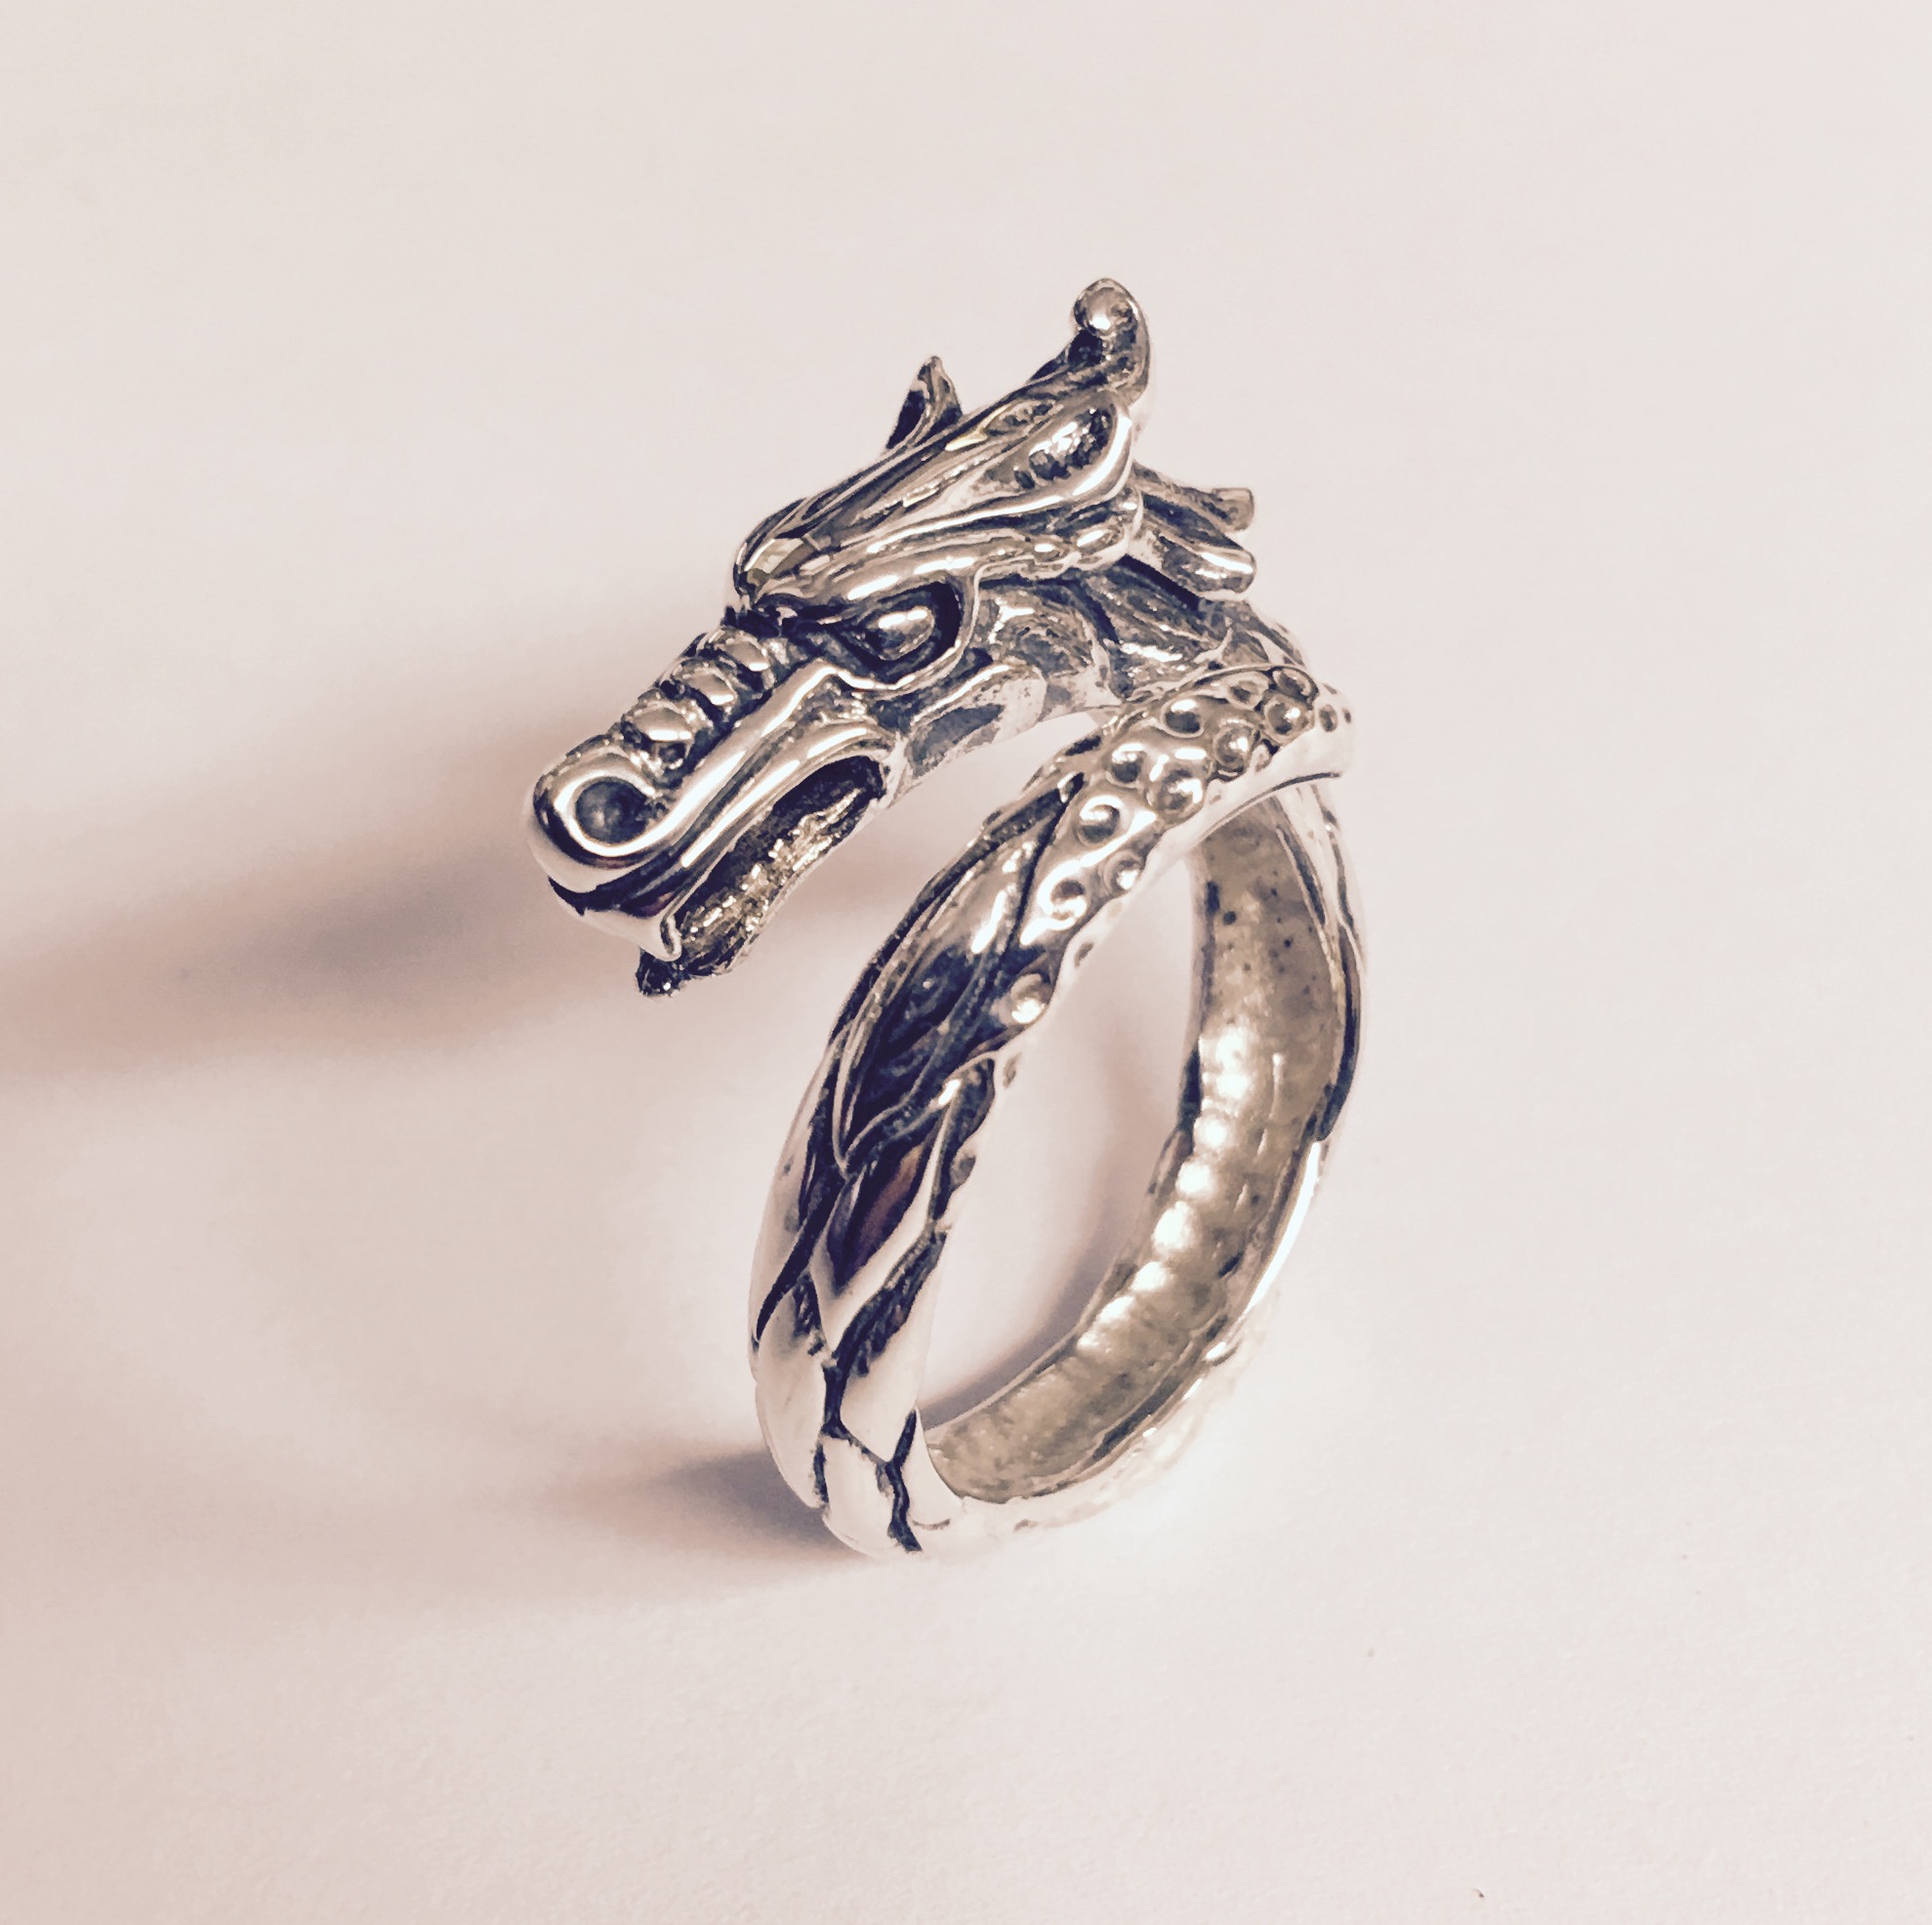 Silver Dragon Ring - Handmade Celtic Jewelry